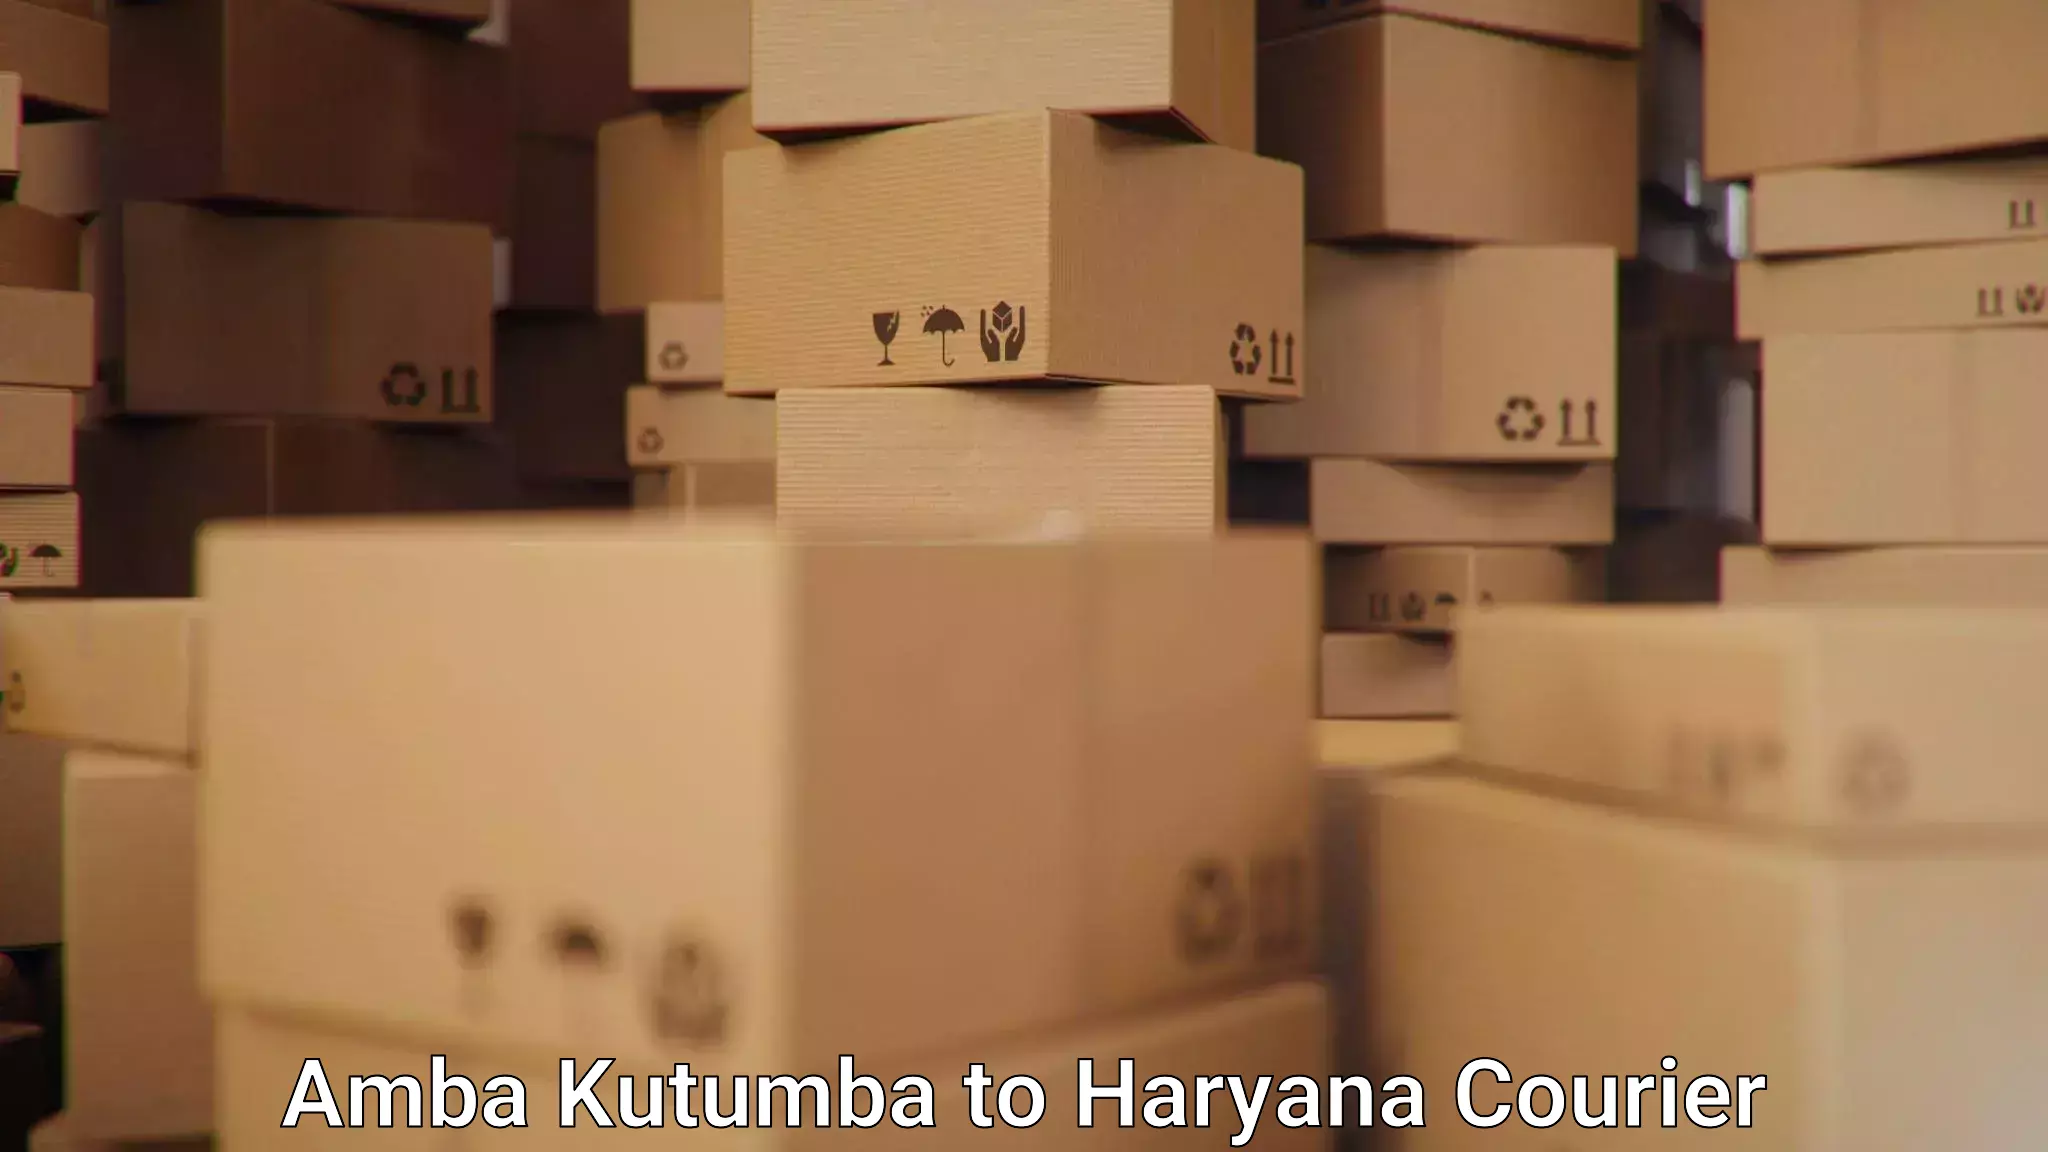 Courier service comparison in Amba Kutumba to Bhuna